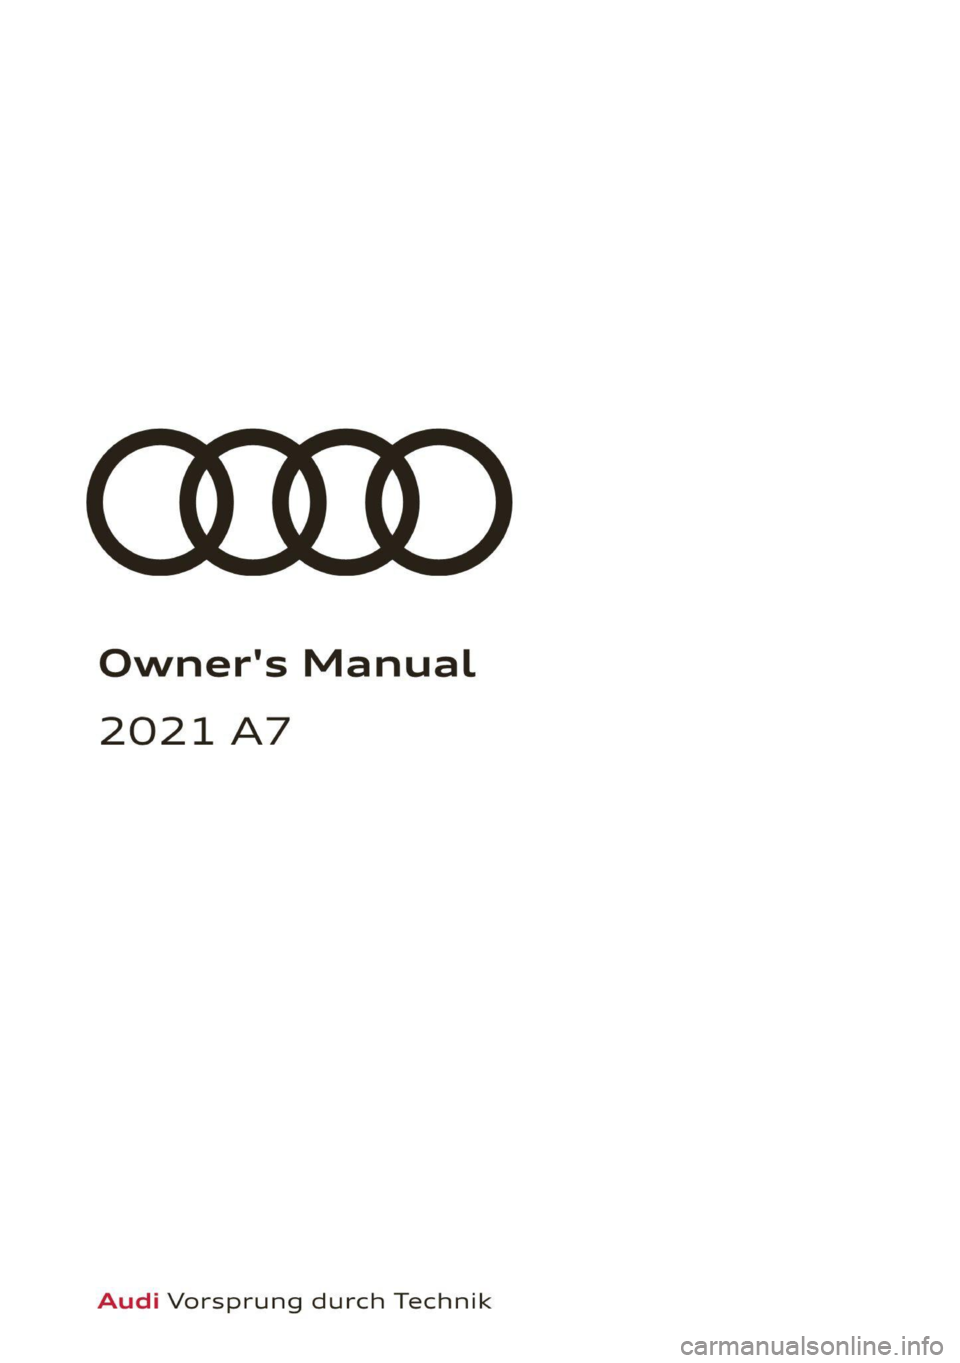 AUDI A7 2021  Owner´s Manual Owner's Manual 
2021 A7 
Audi Vorsprung durch Technik  